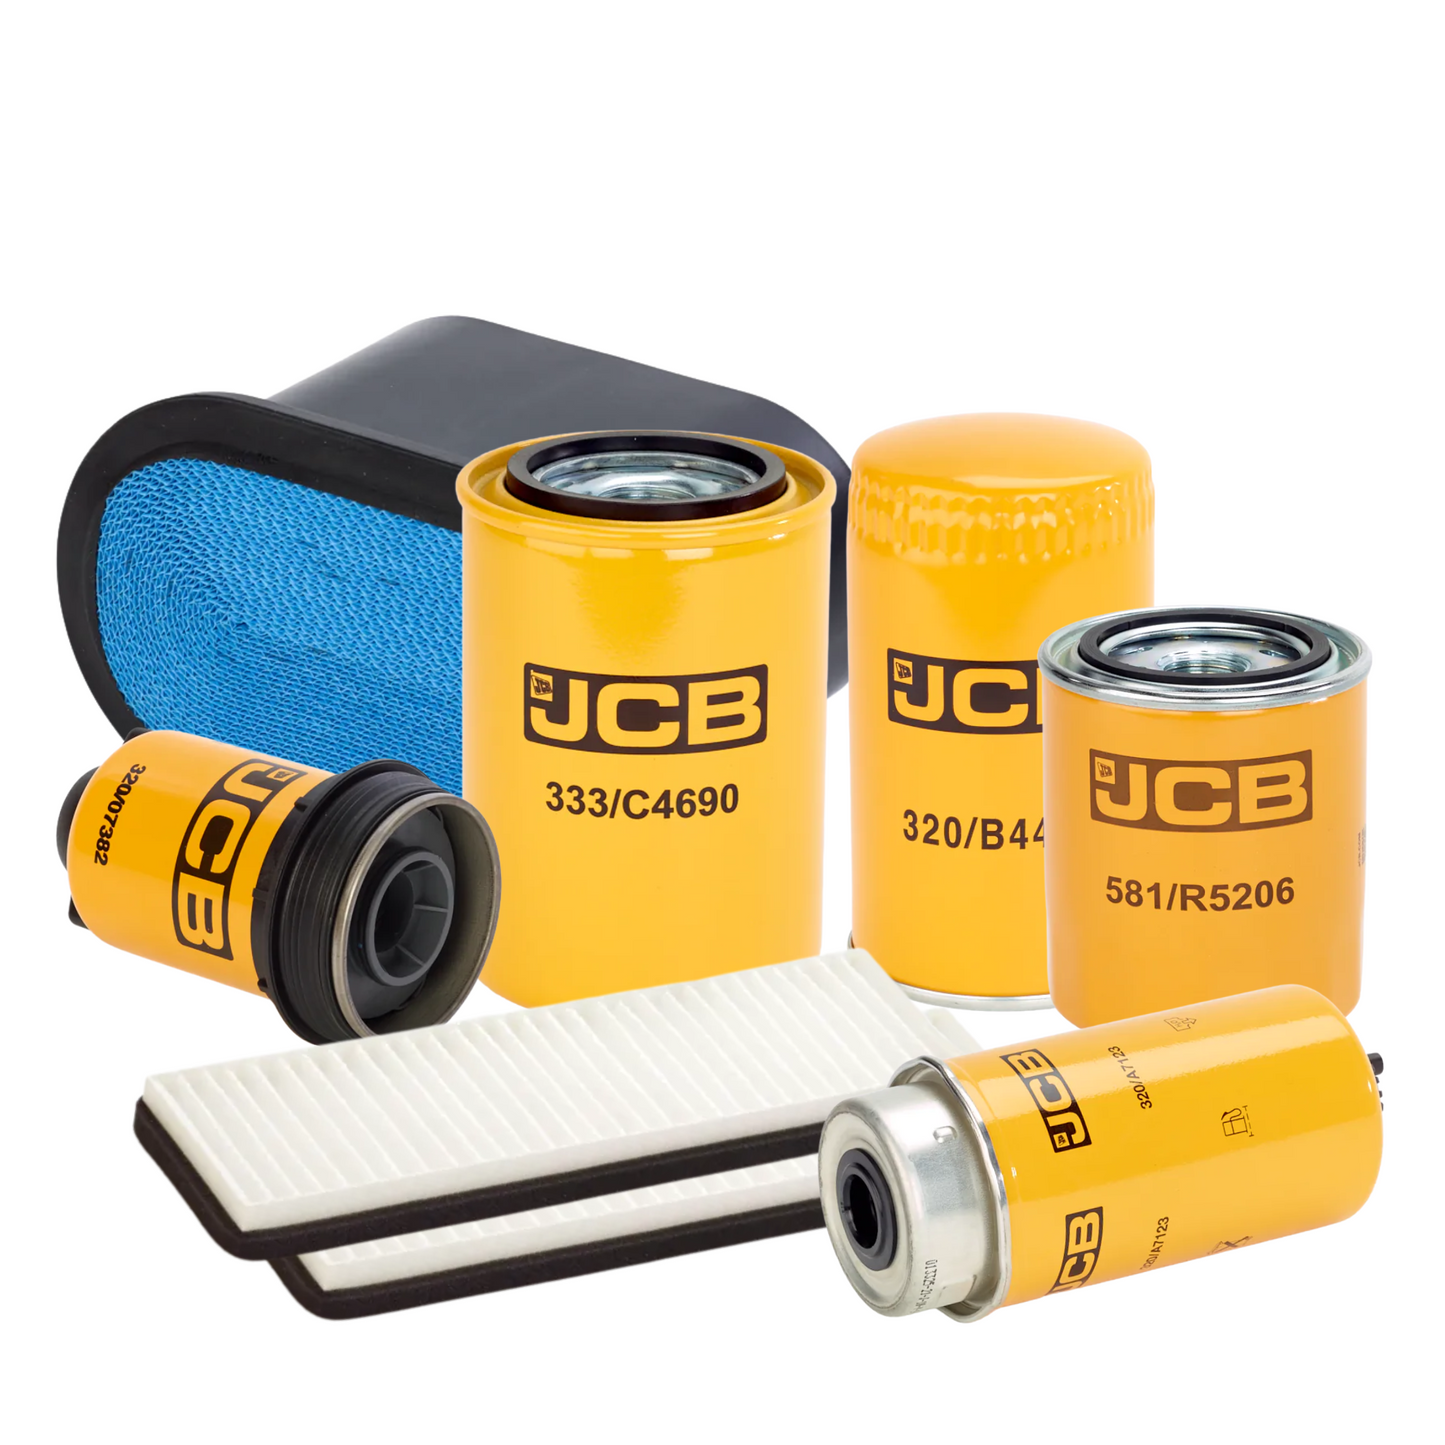 JCB 535-95 5000 Hour Filter Service Kit